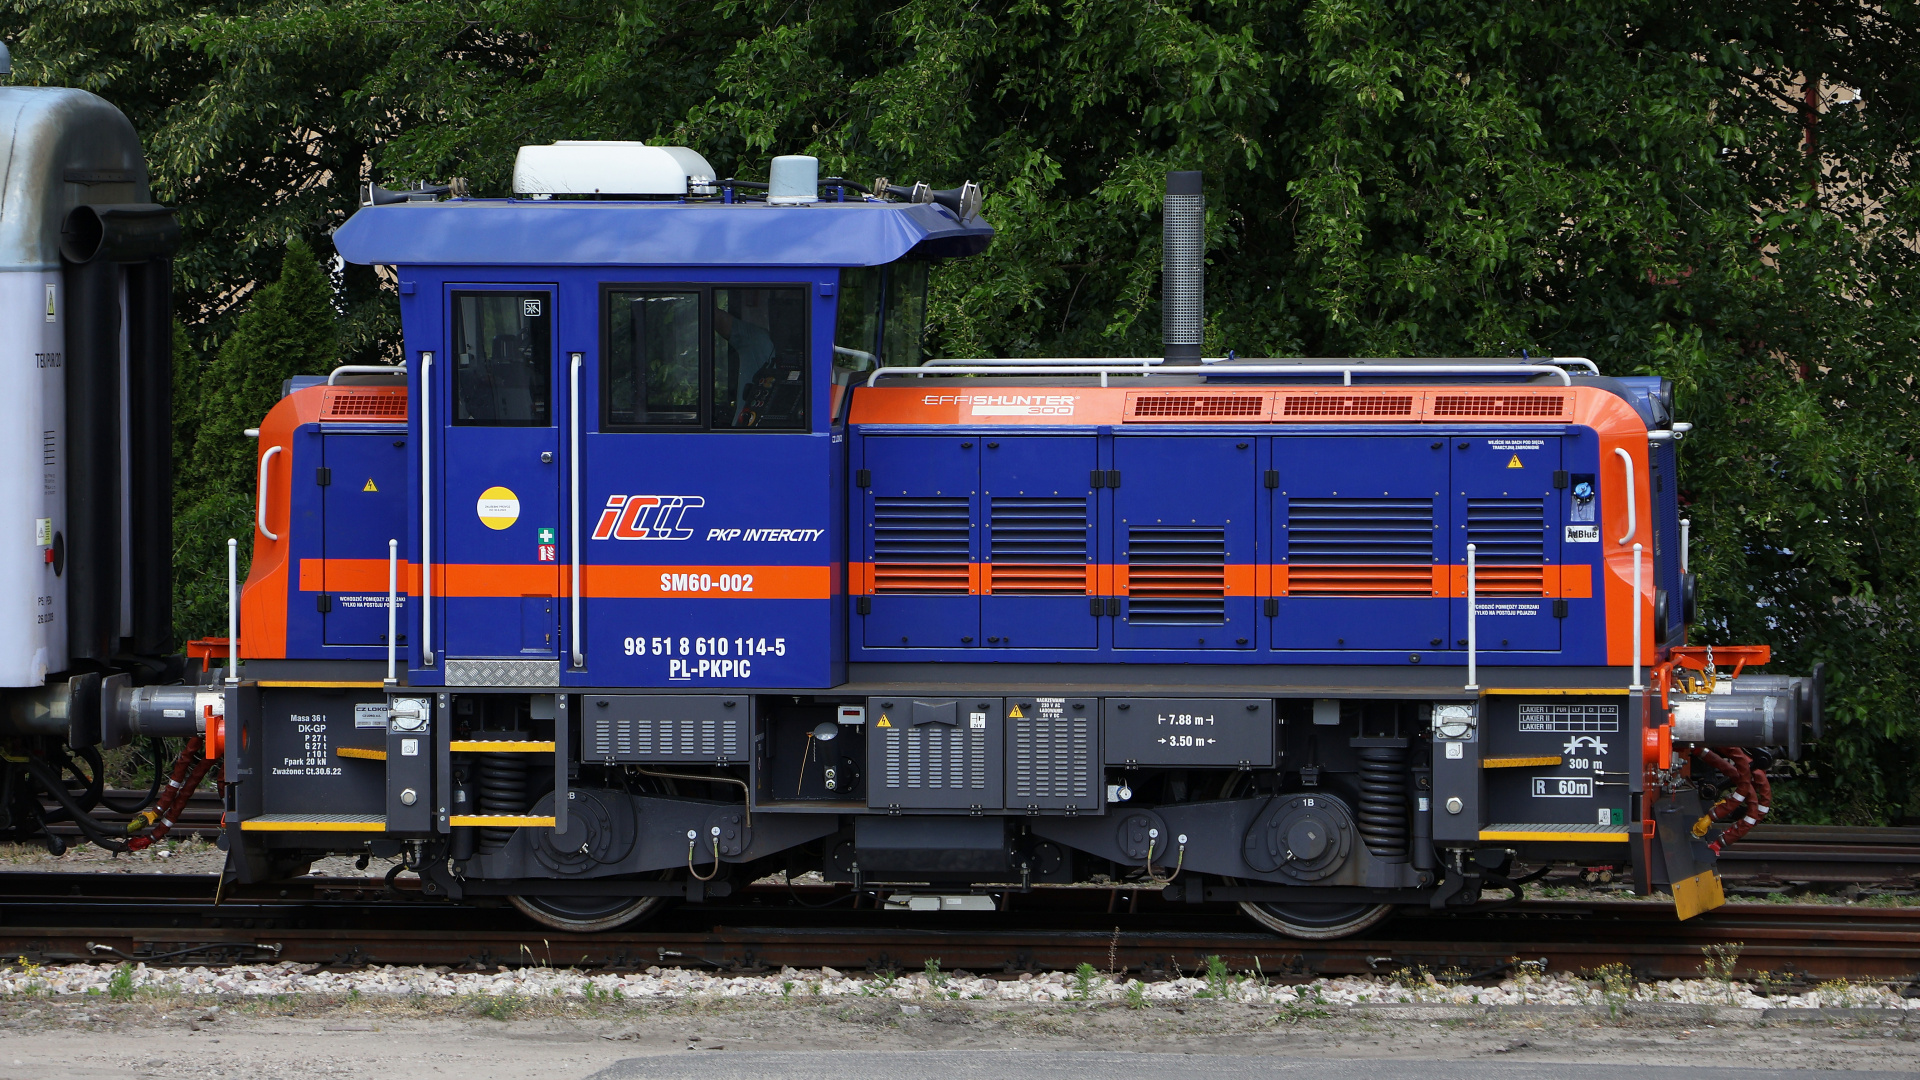 CZ Loko EffiShunter 300 SM60-002 (Vehicles » Trains and Locomotives)